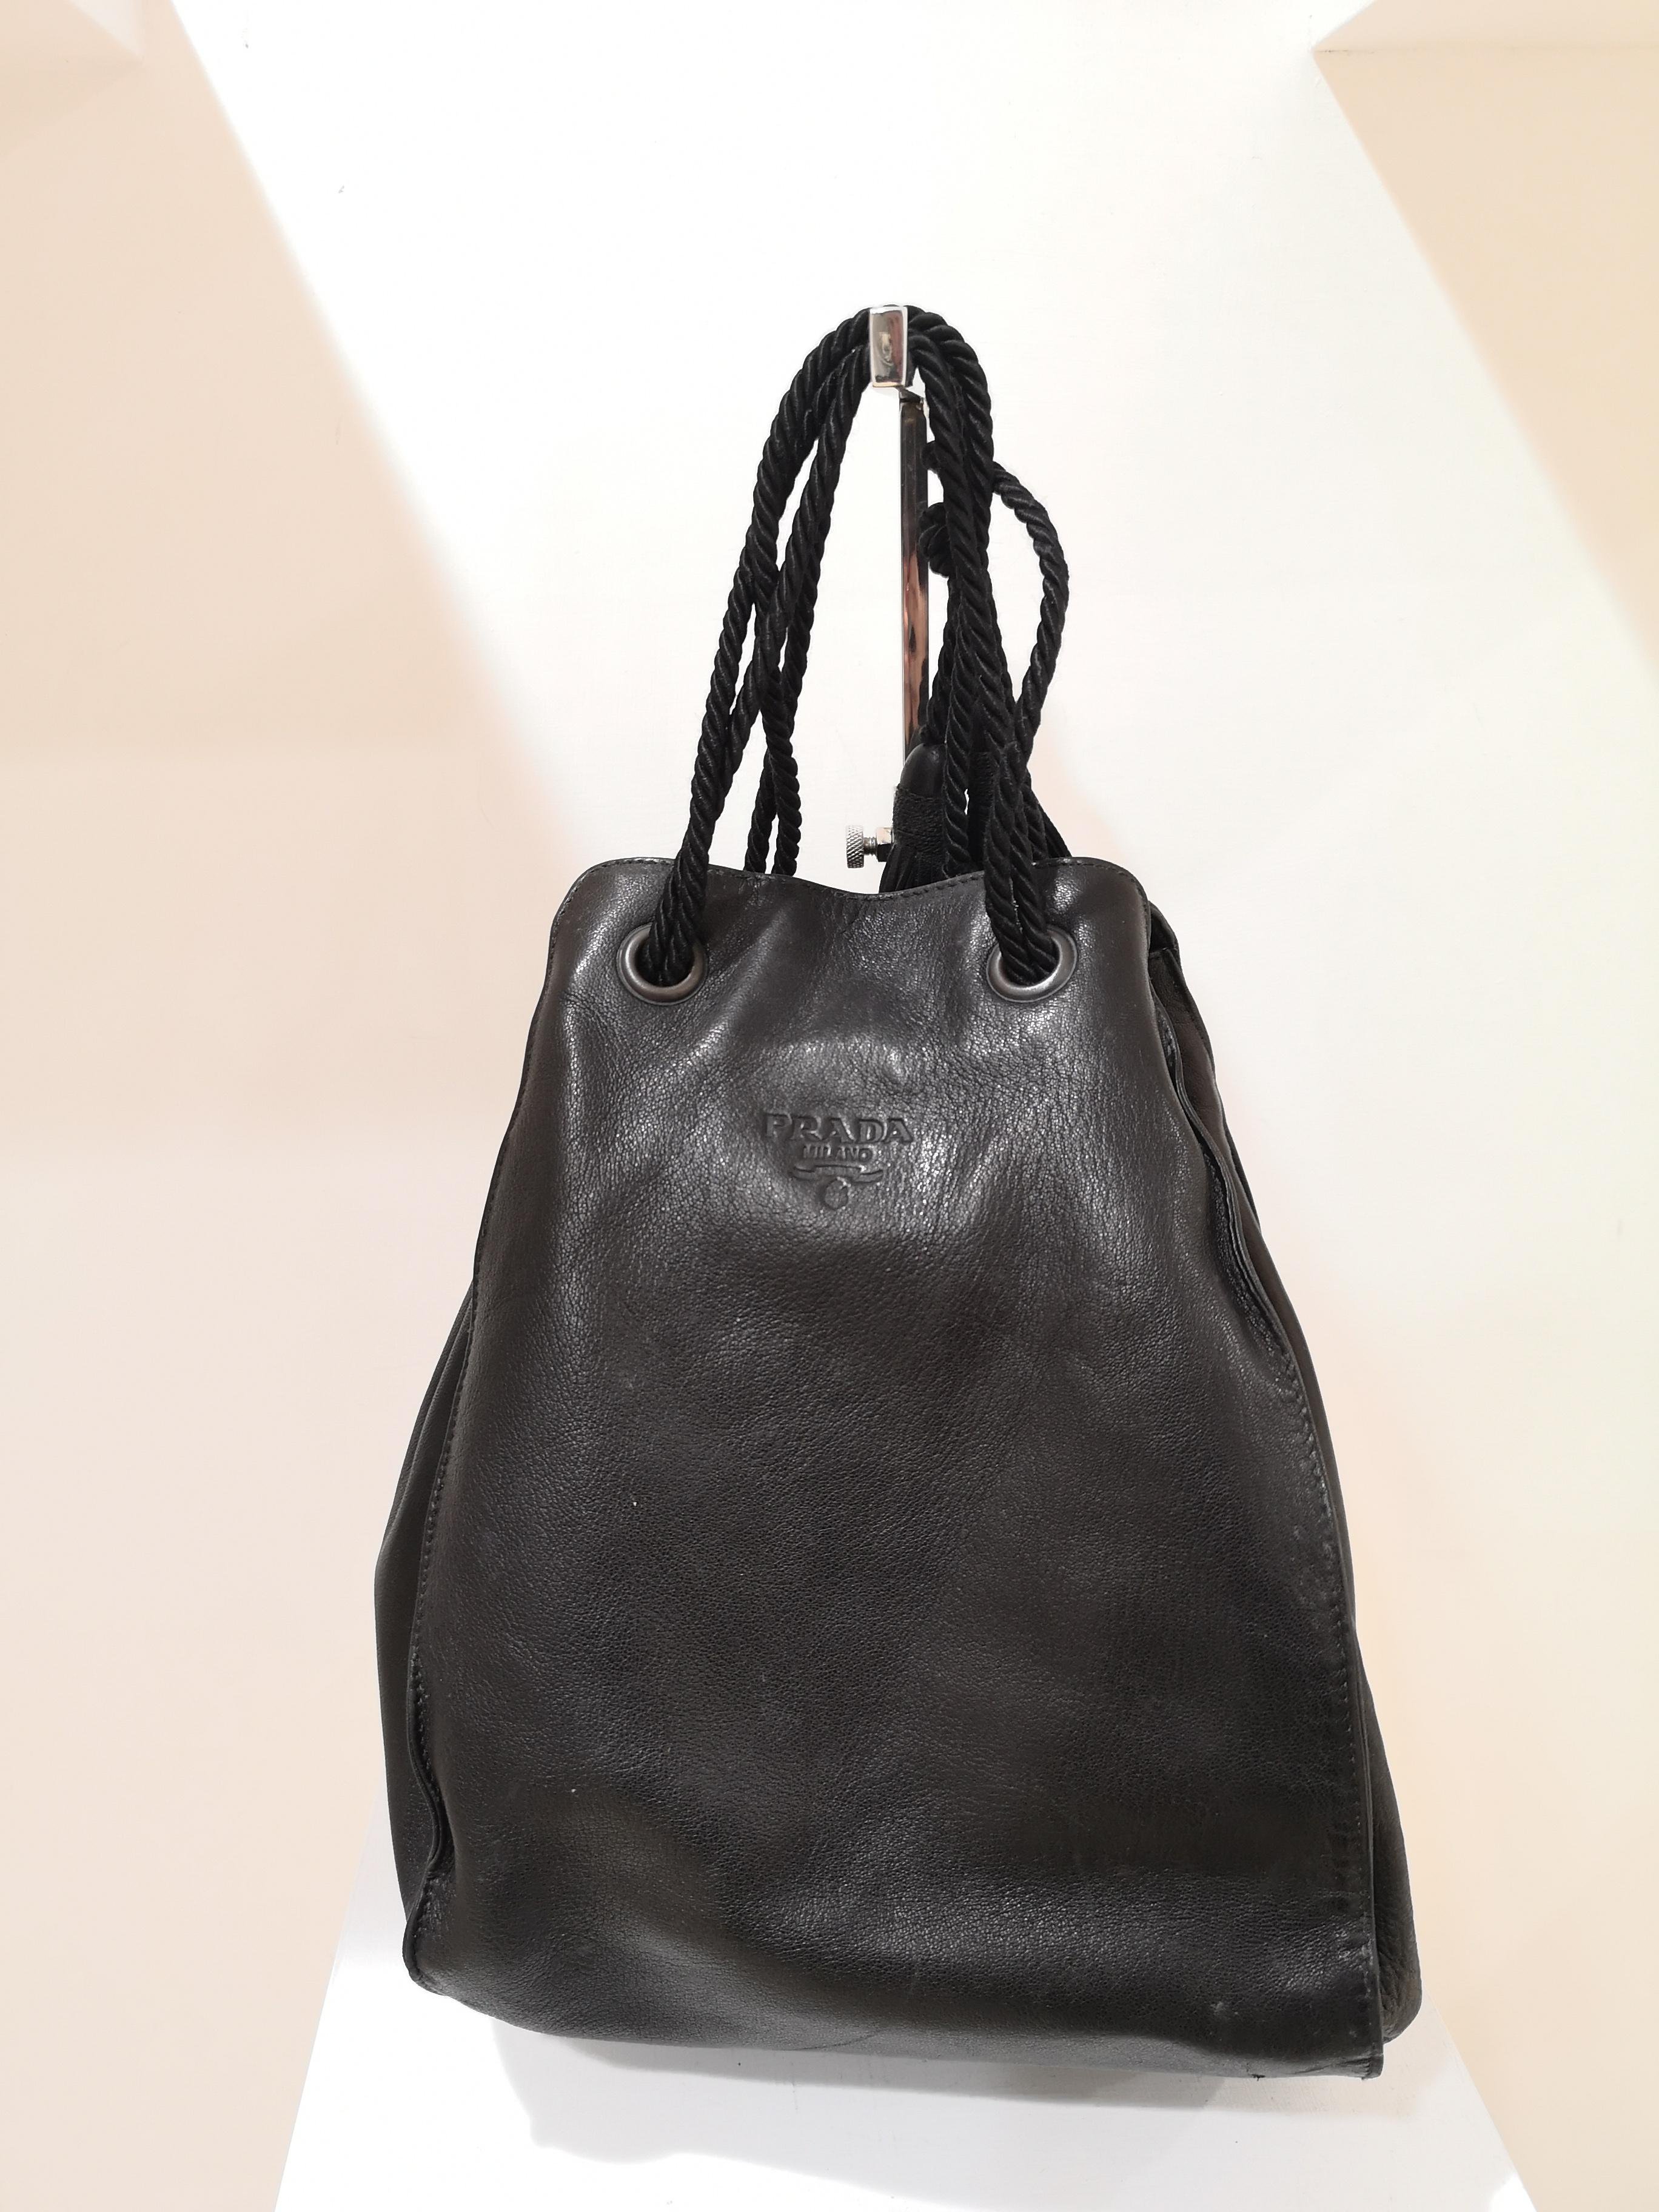 Prada black leather satchel 2